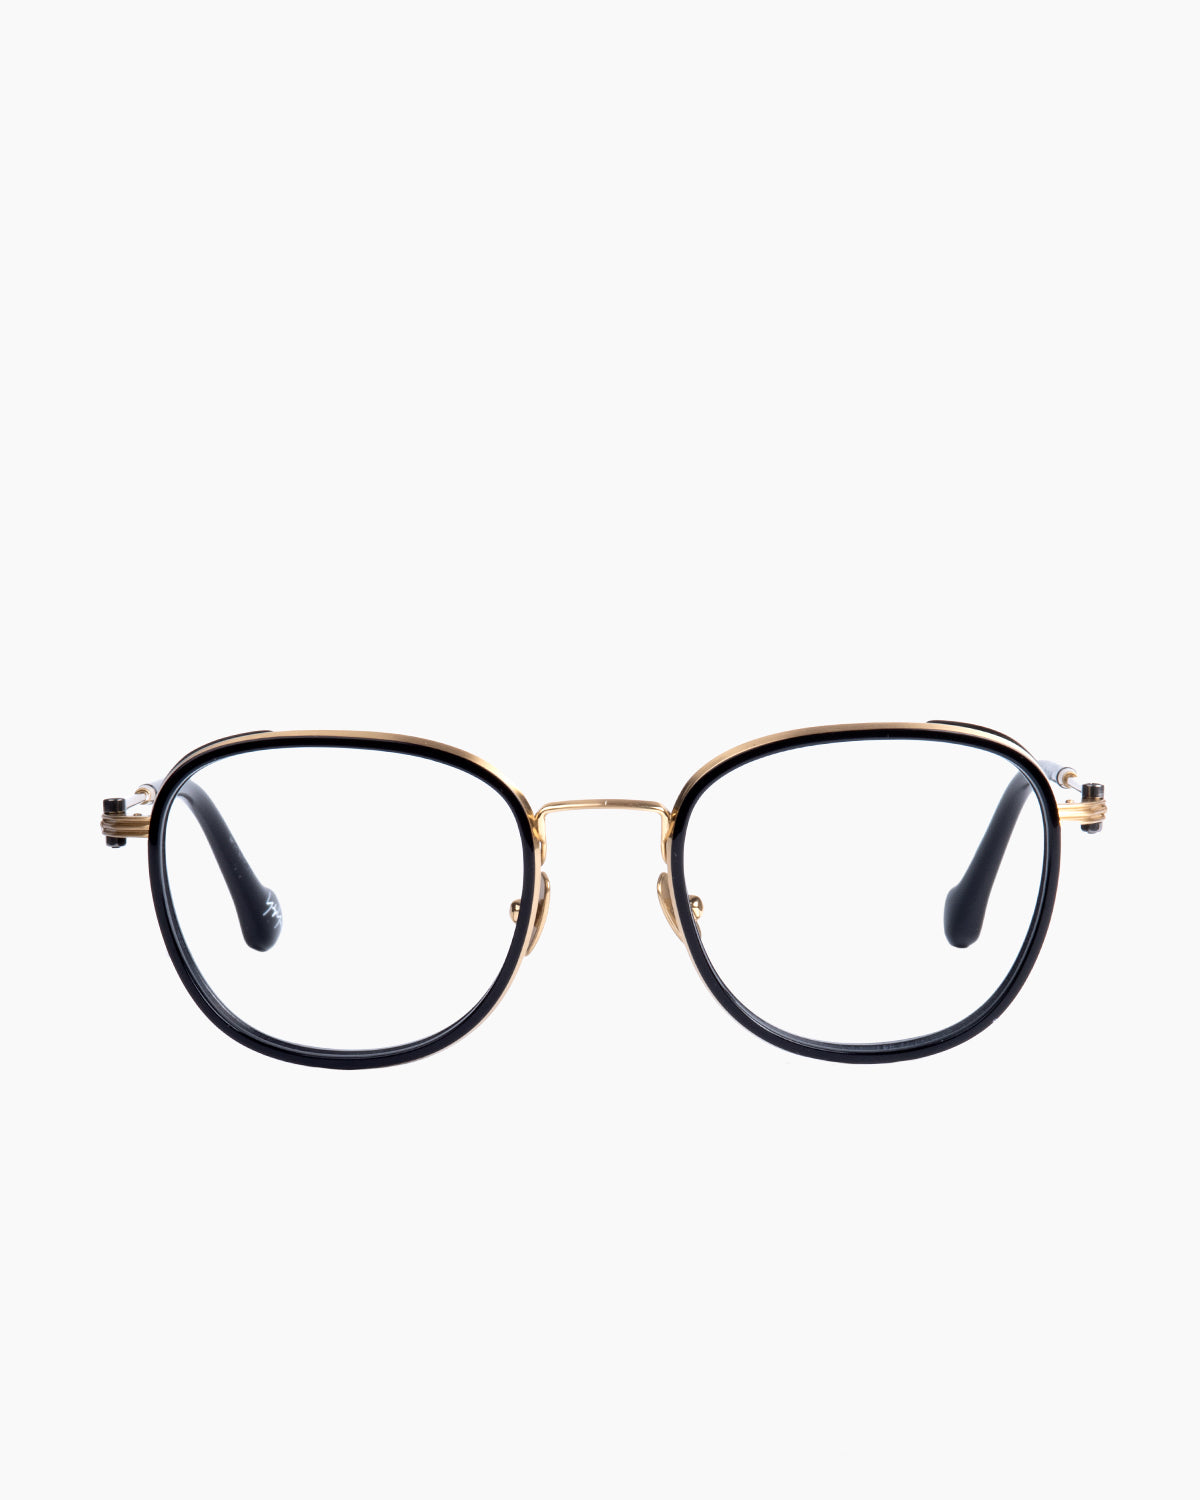 Yohji Yamamoto - Look005 - 001 | Bar à lunettes:  Marie-Sophie Dion